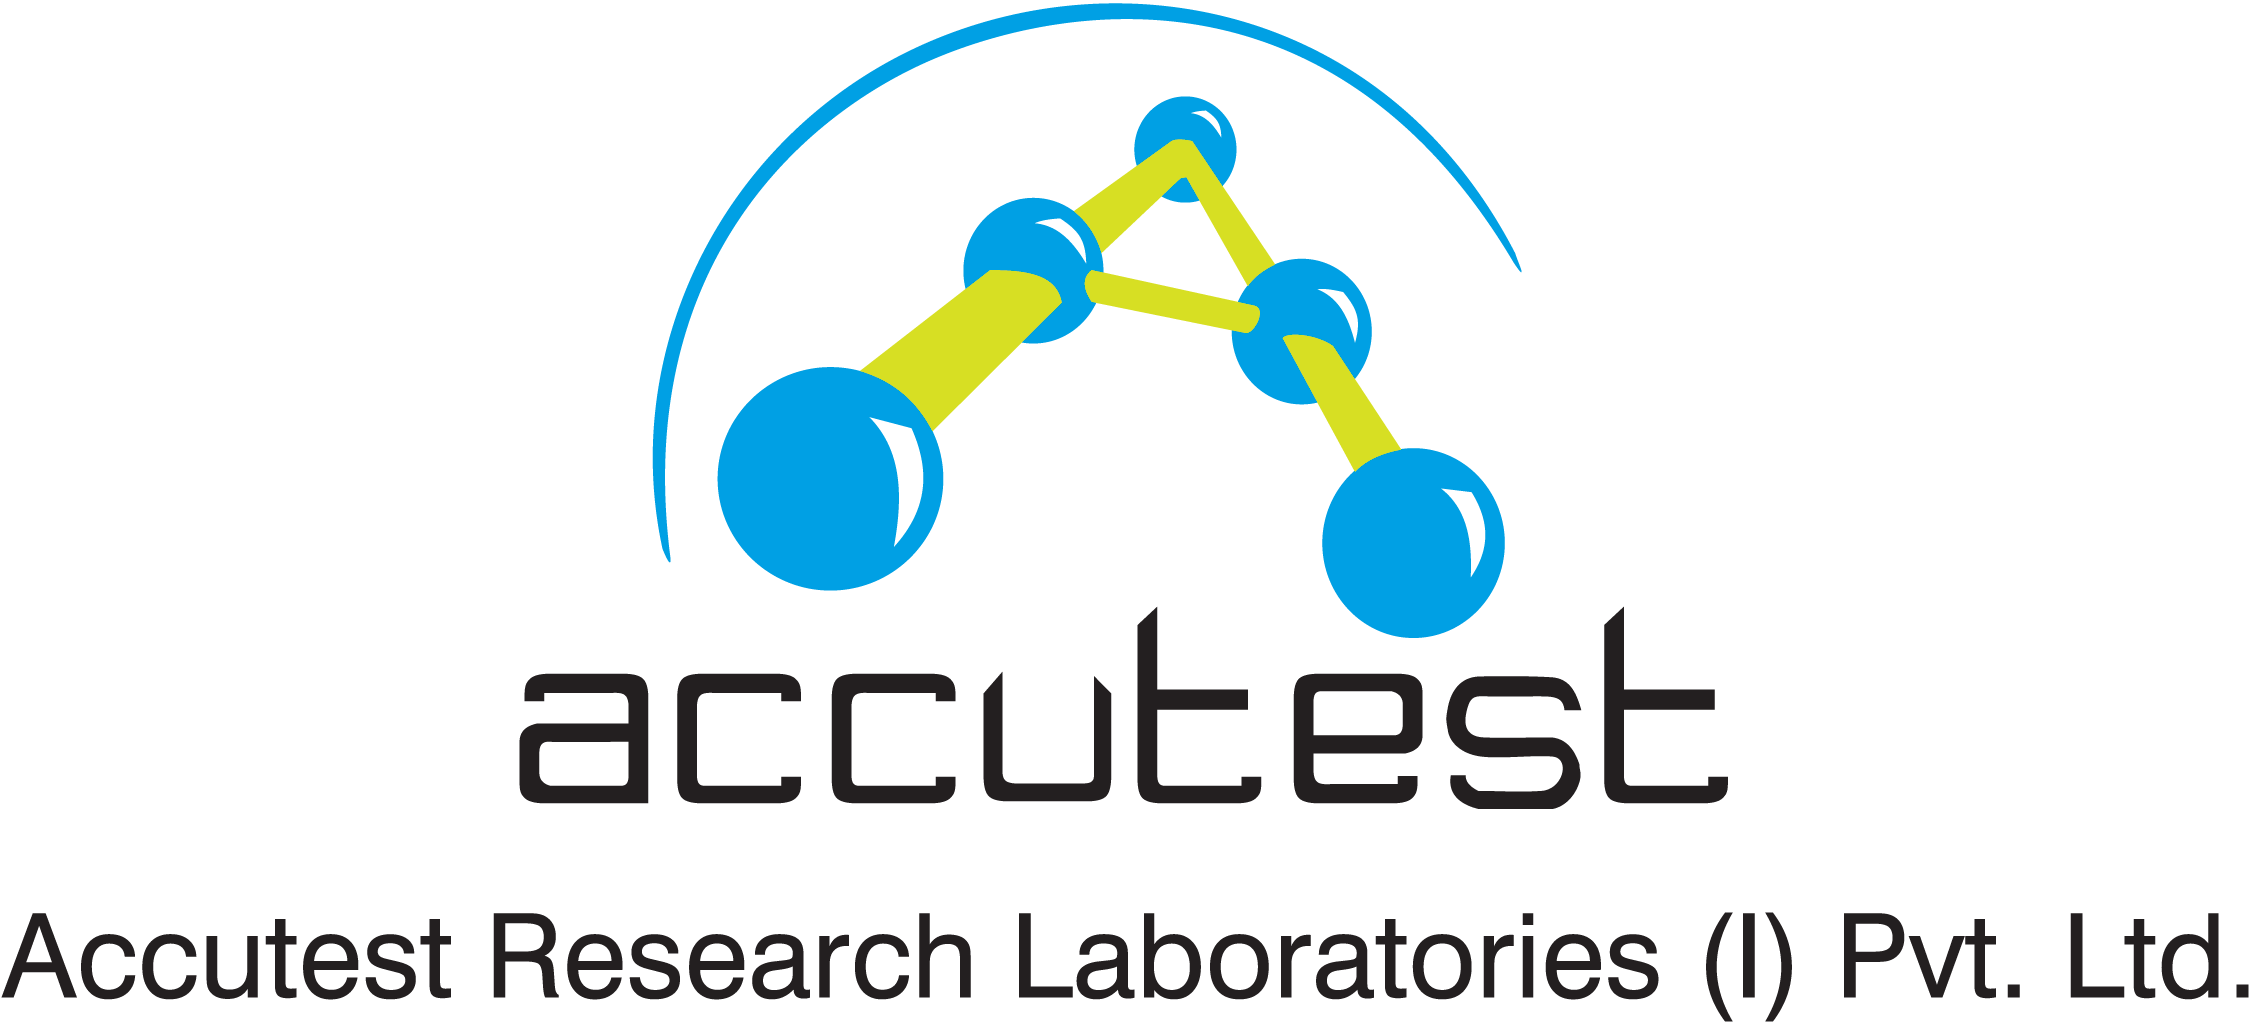 ACCUTEST logo